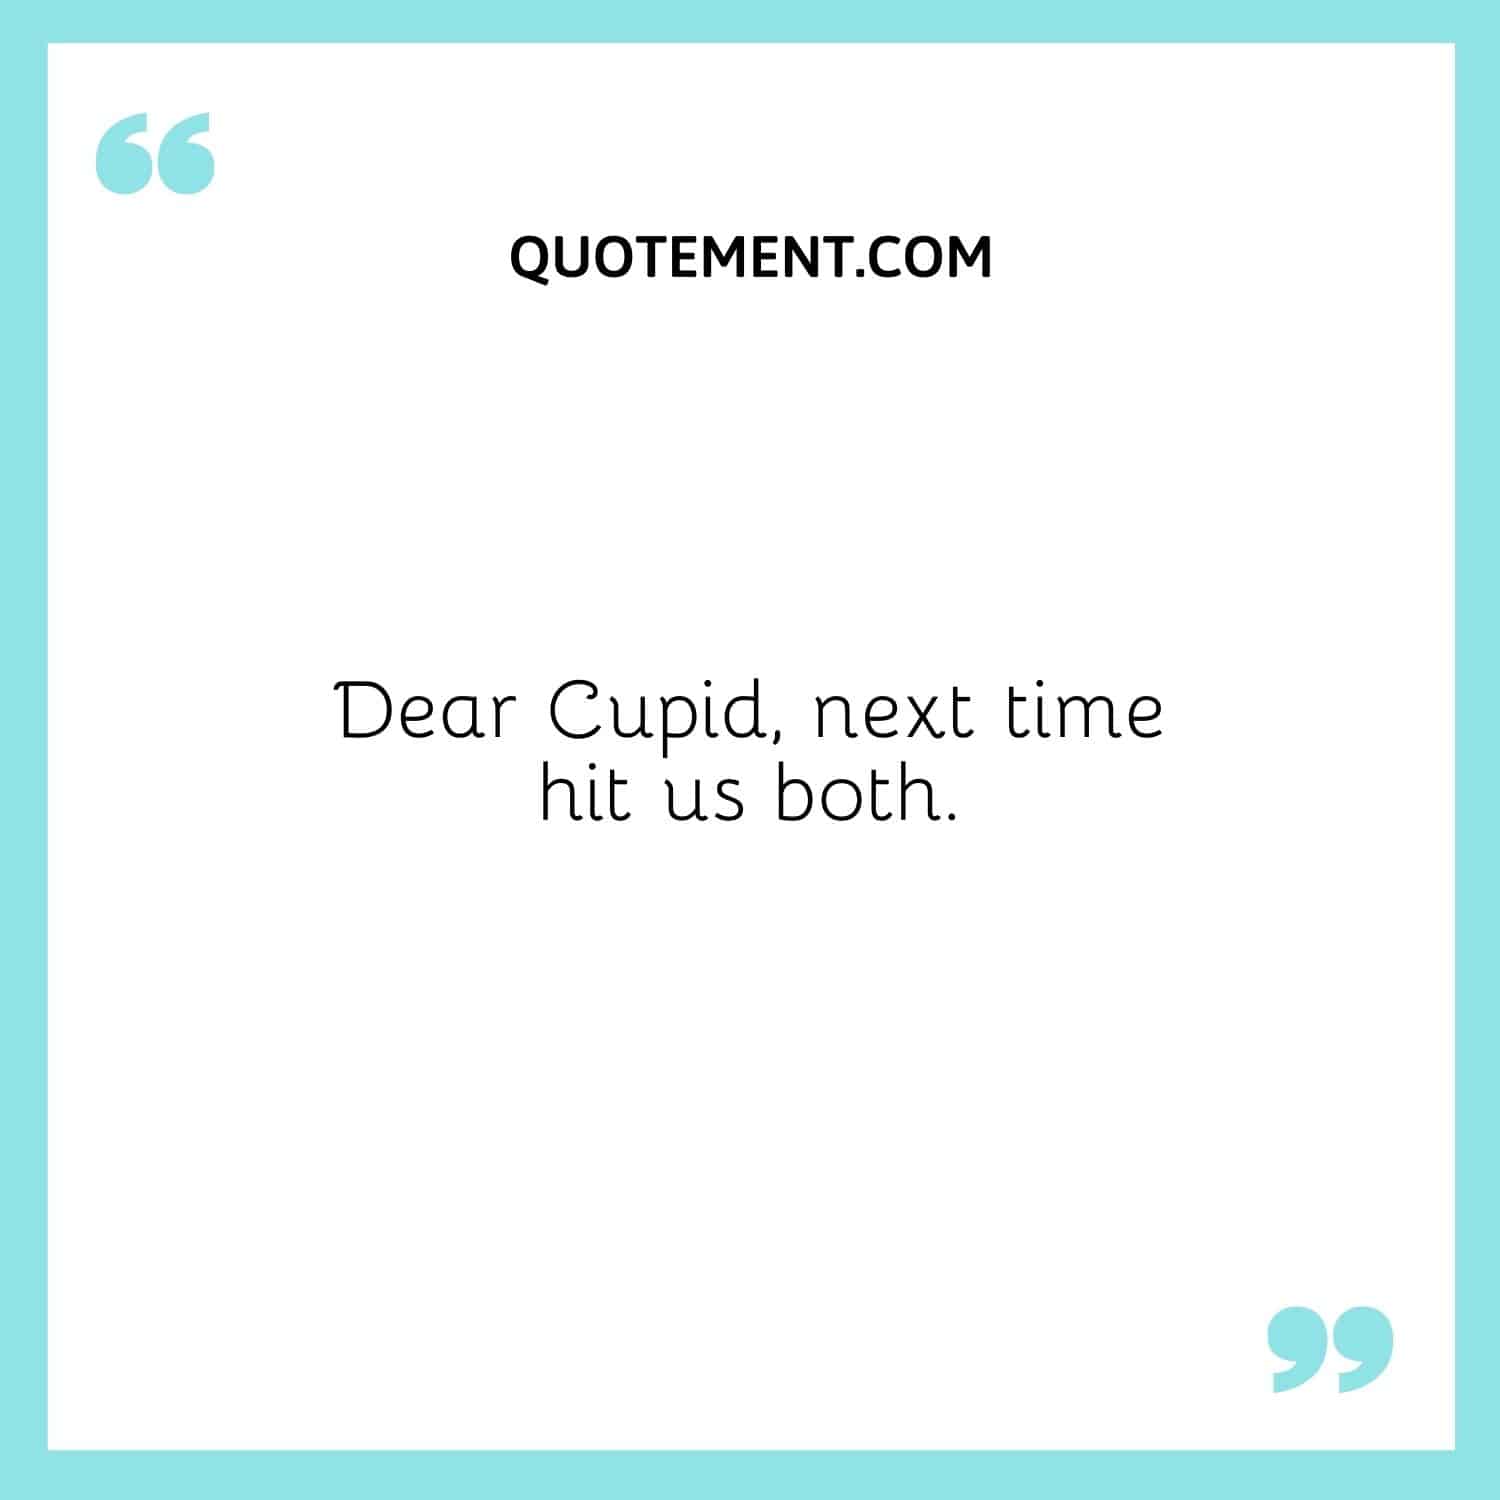 Dear Cupid, next time hit us both